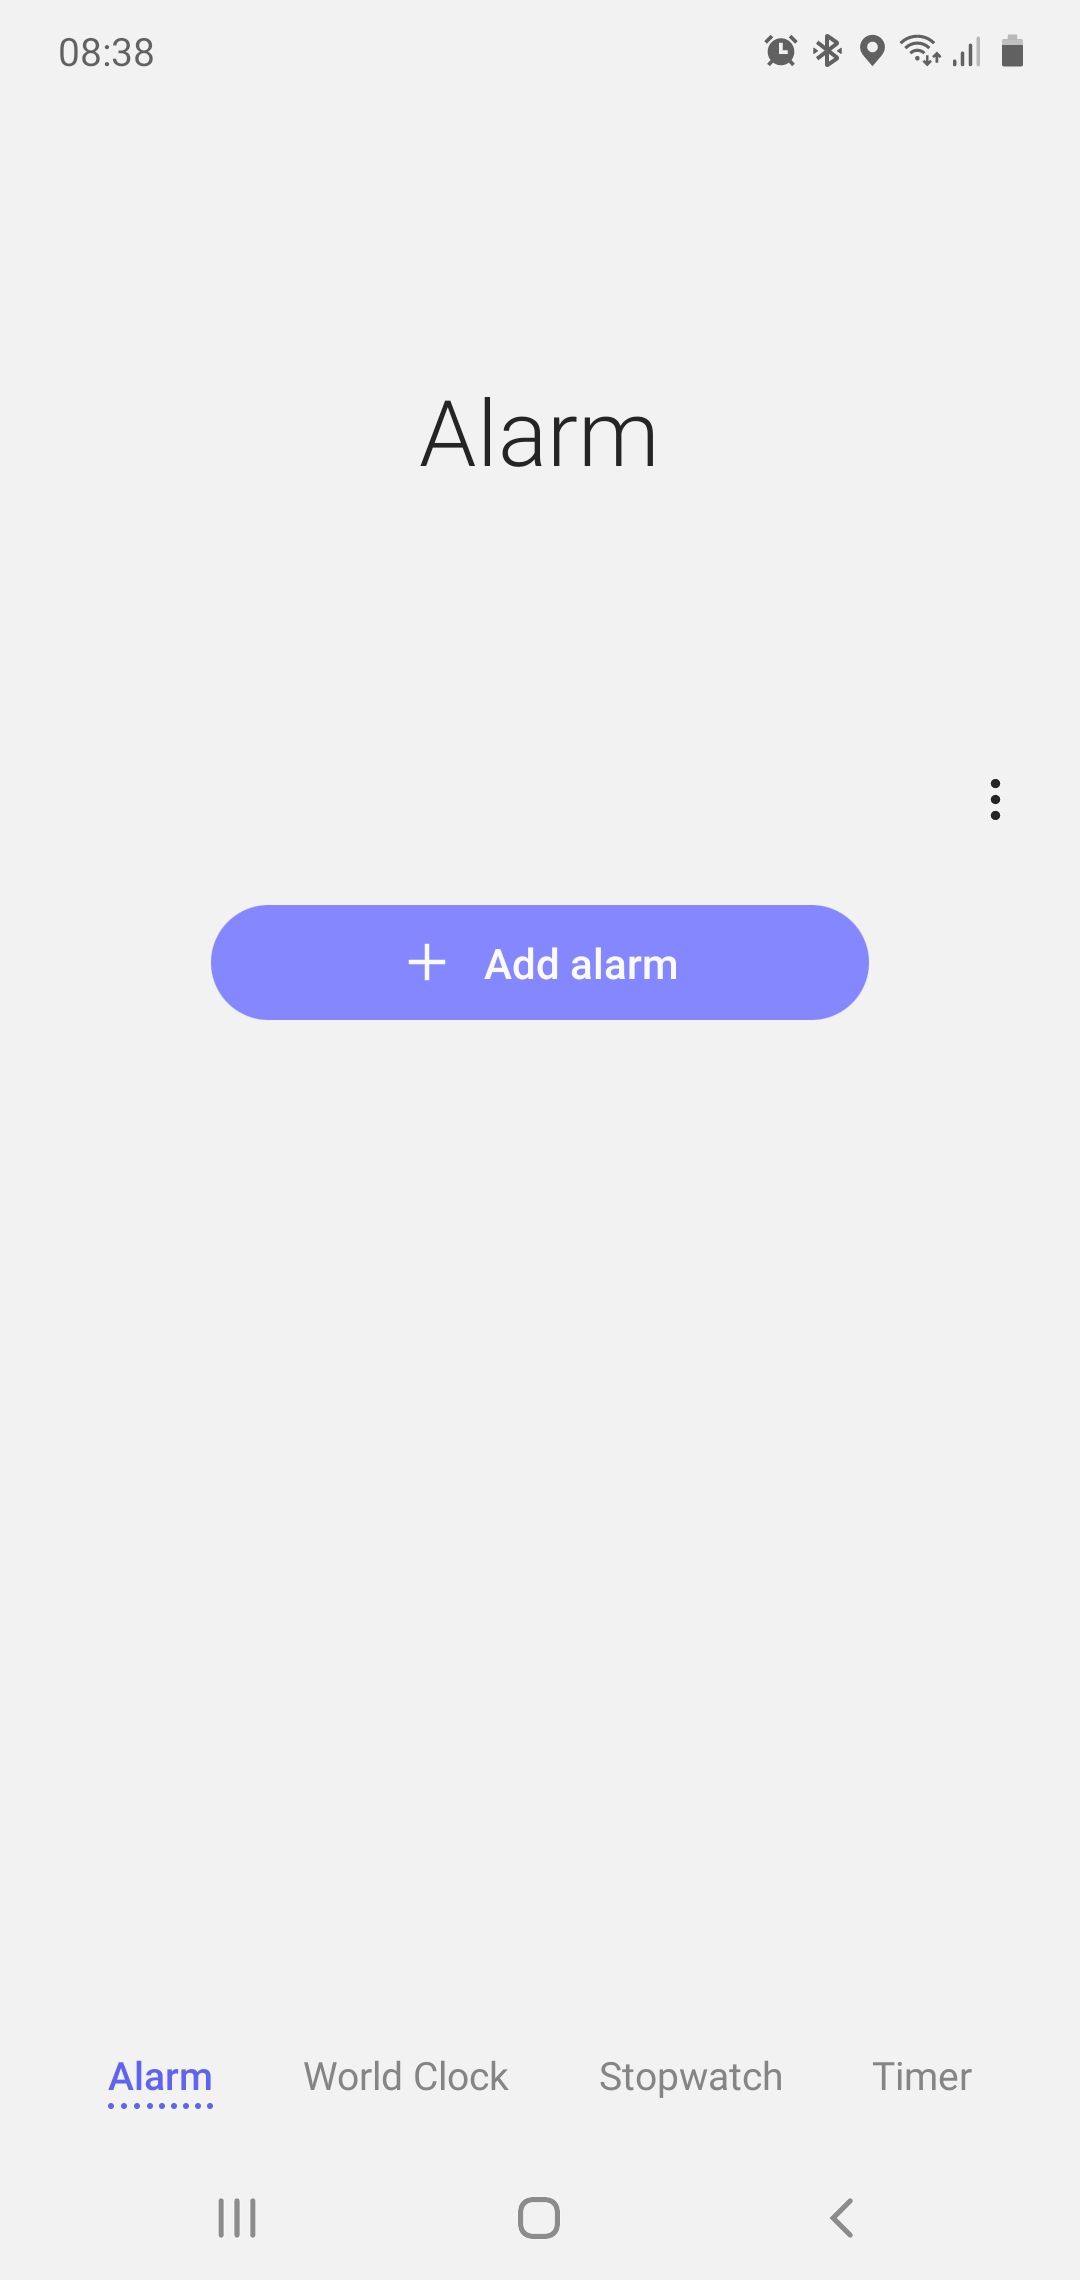 I can't turn off alarm - Samsung Community